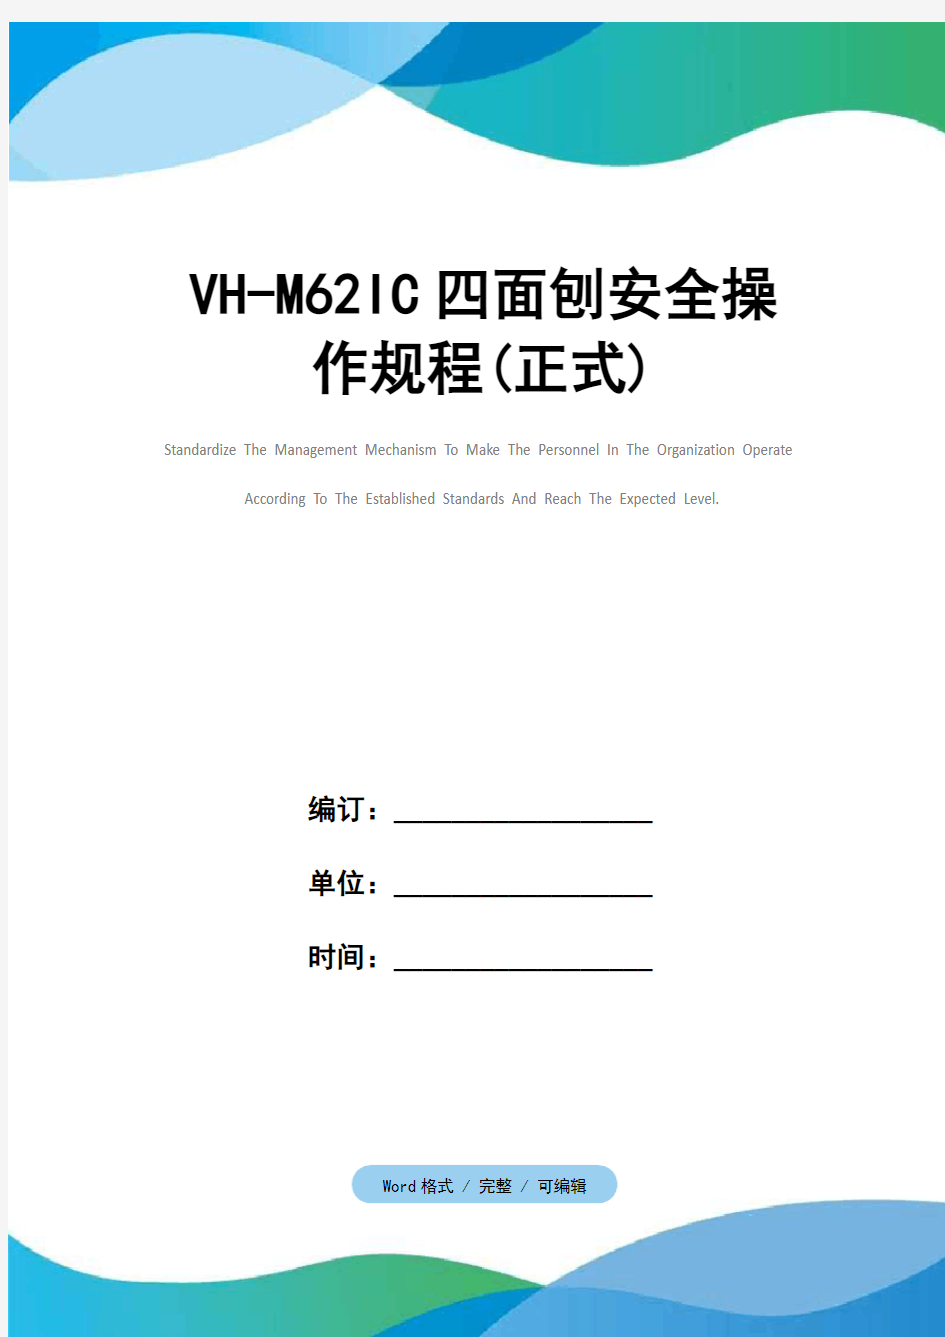 VH-M62IC四面刨安全操作规程(正式)